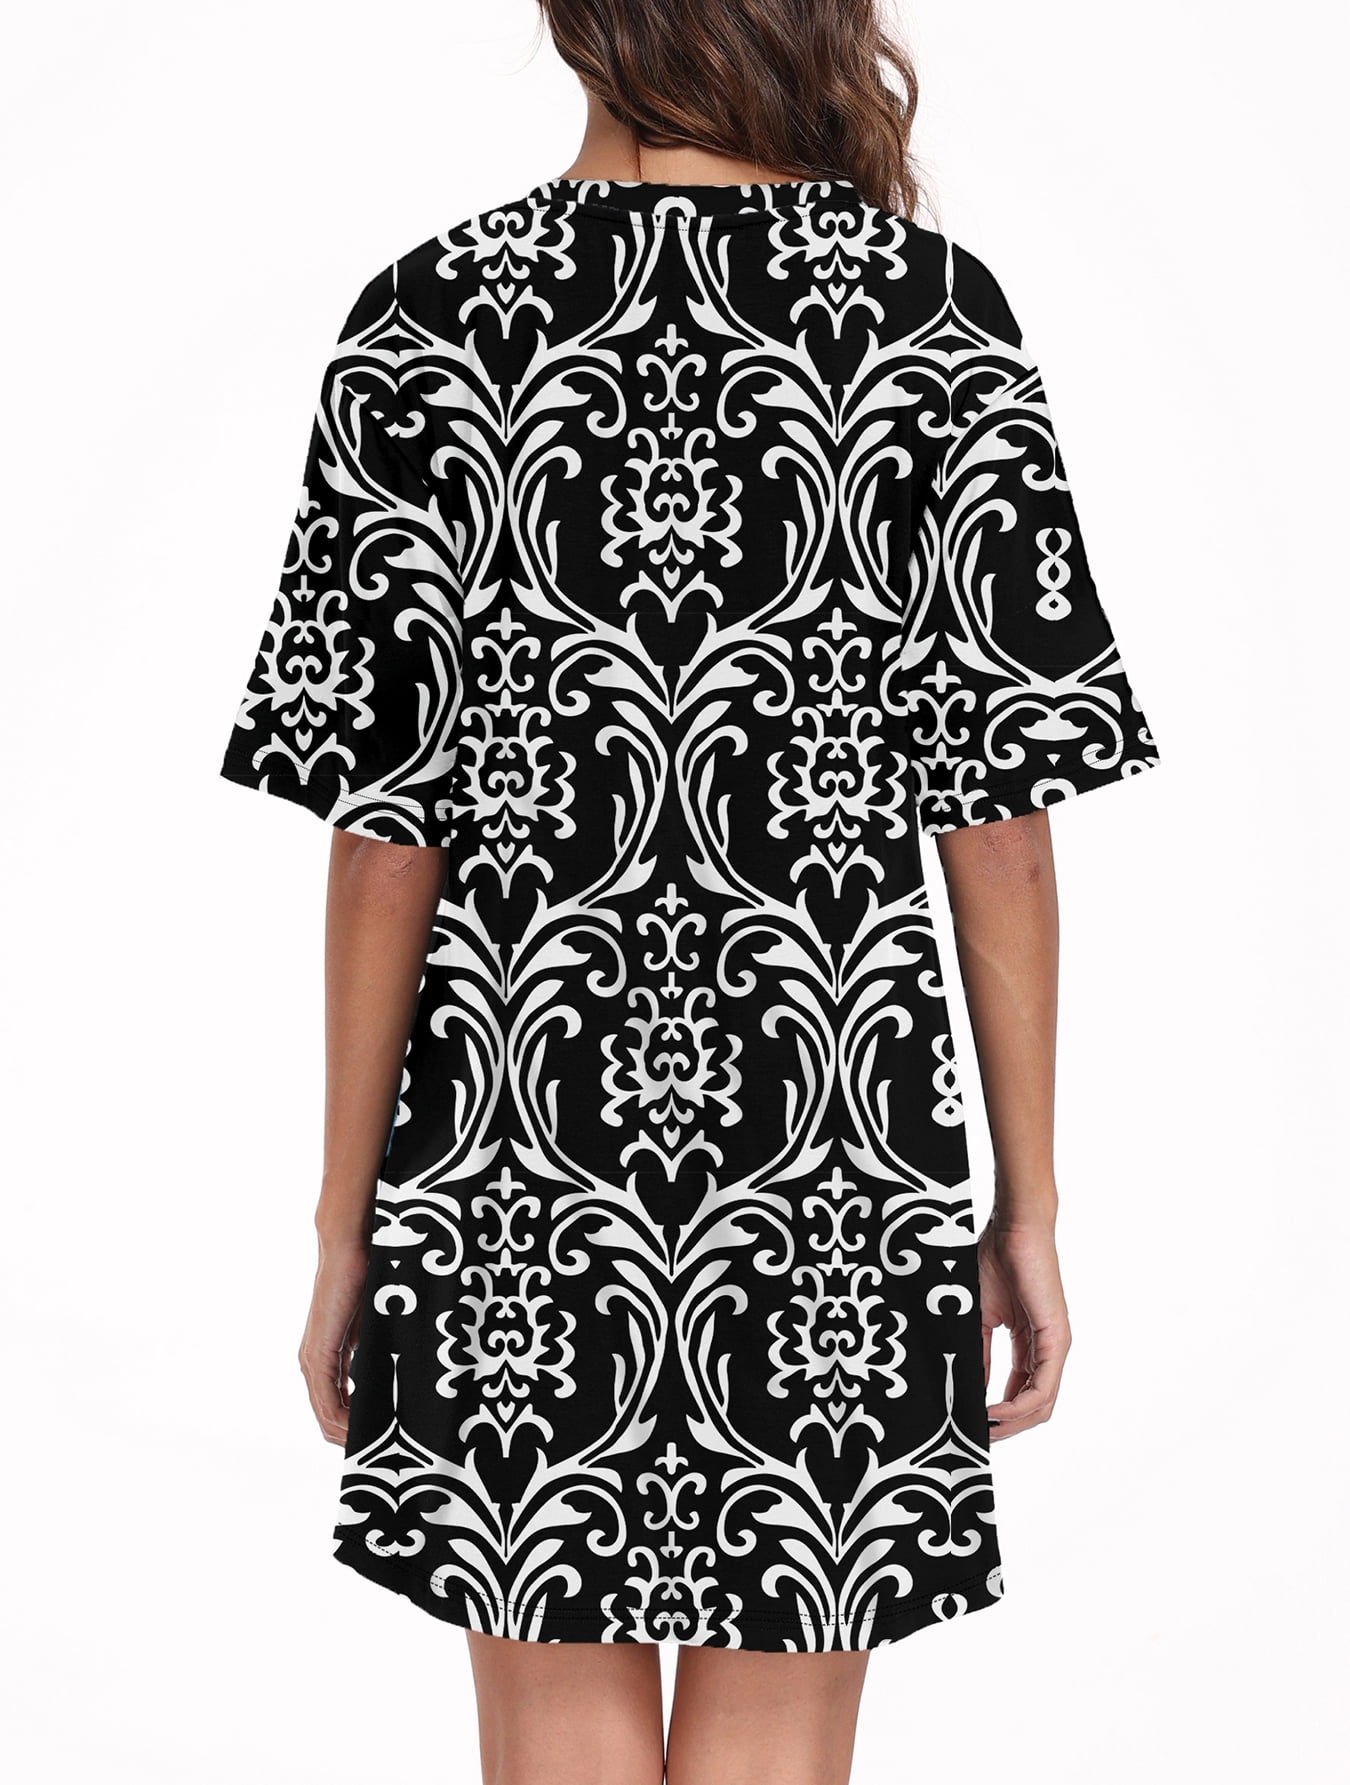 DreamFish Nightgowns for Women V Neck Short Sleeve Knee Length Sleep Dress,  Woman Sleepshirt/Nightshirts/Sleepwear 